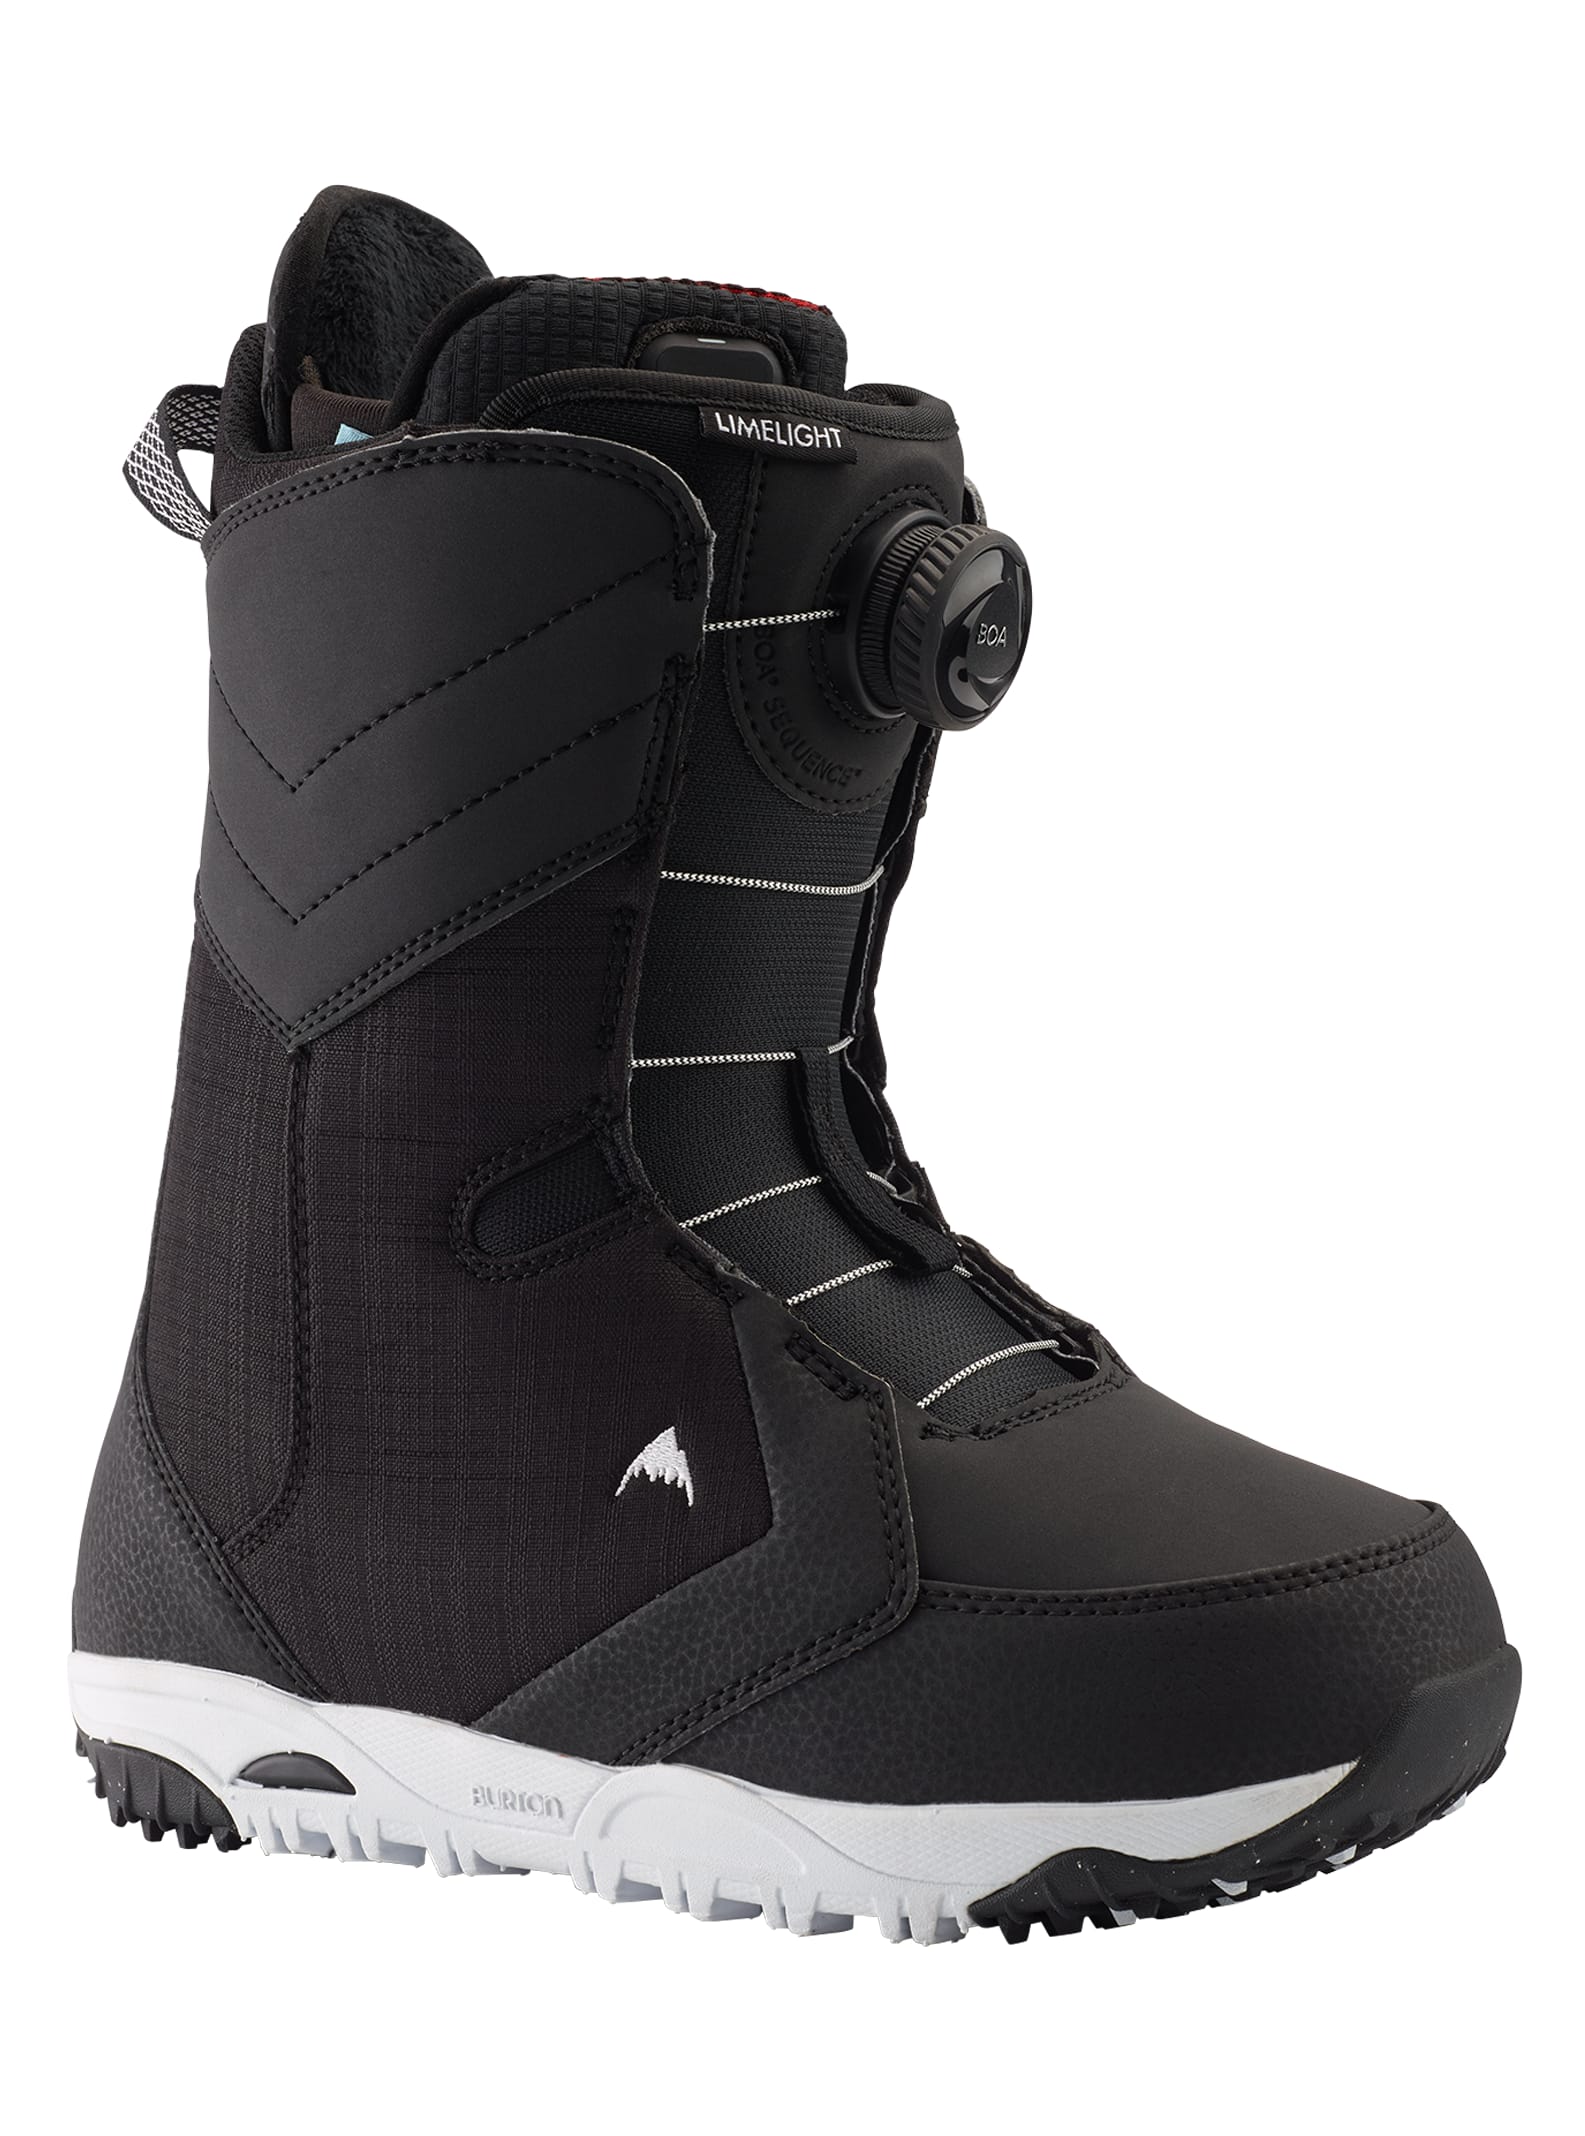 Burton - Boots de snowboard Limelight Boa® Heat femme, Black, 6.5